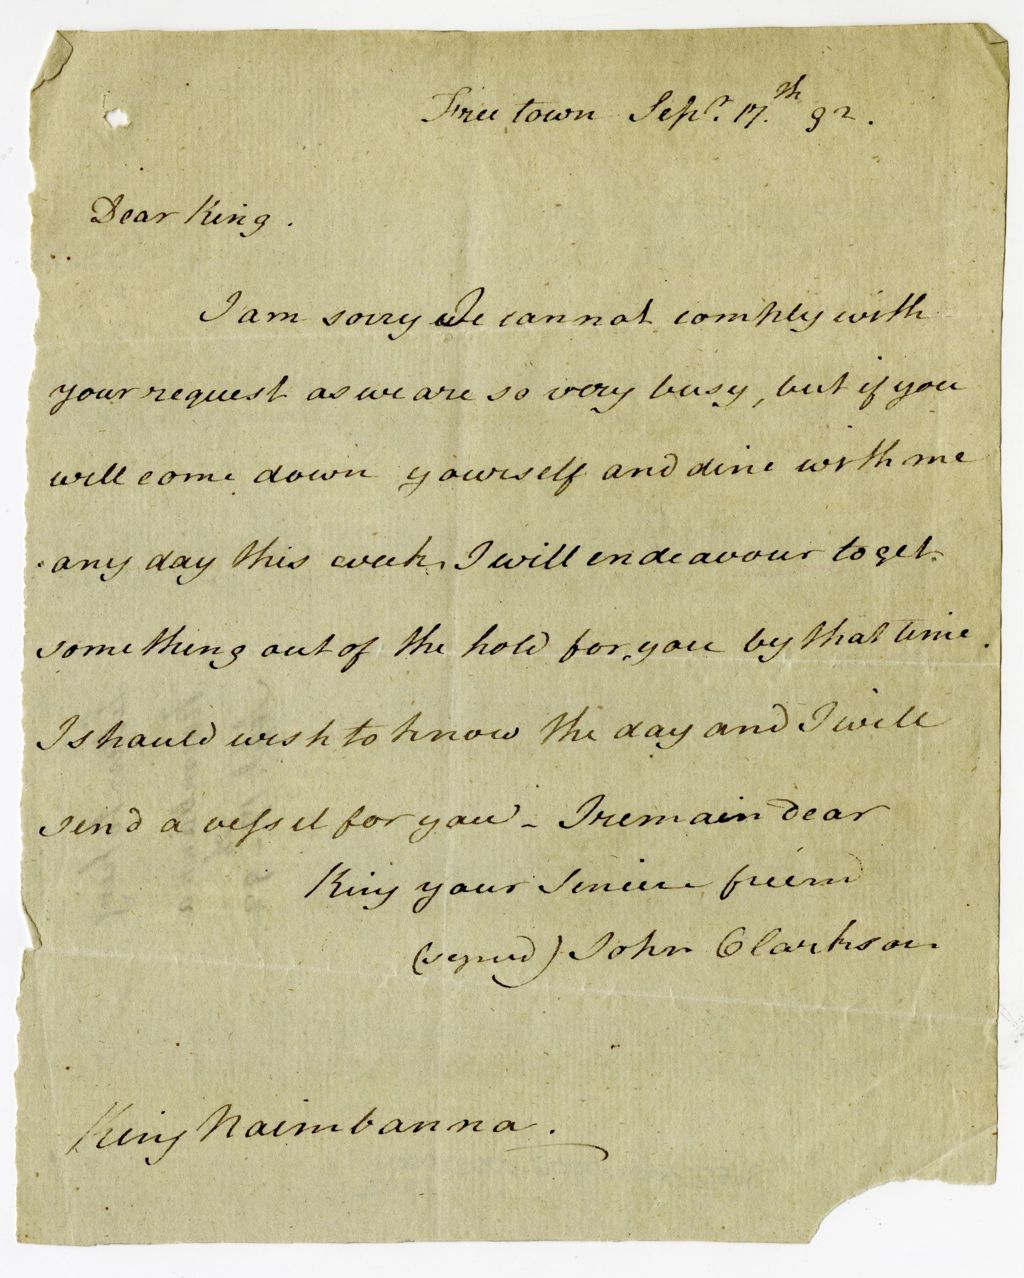 Miniature of Letter from John Clarkson to King Naimbanna